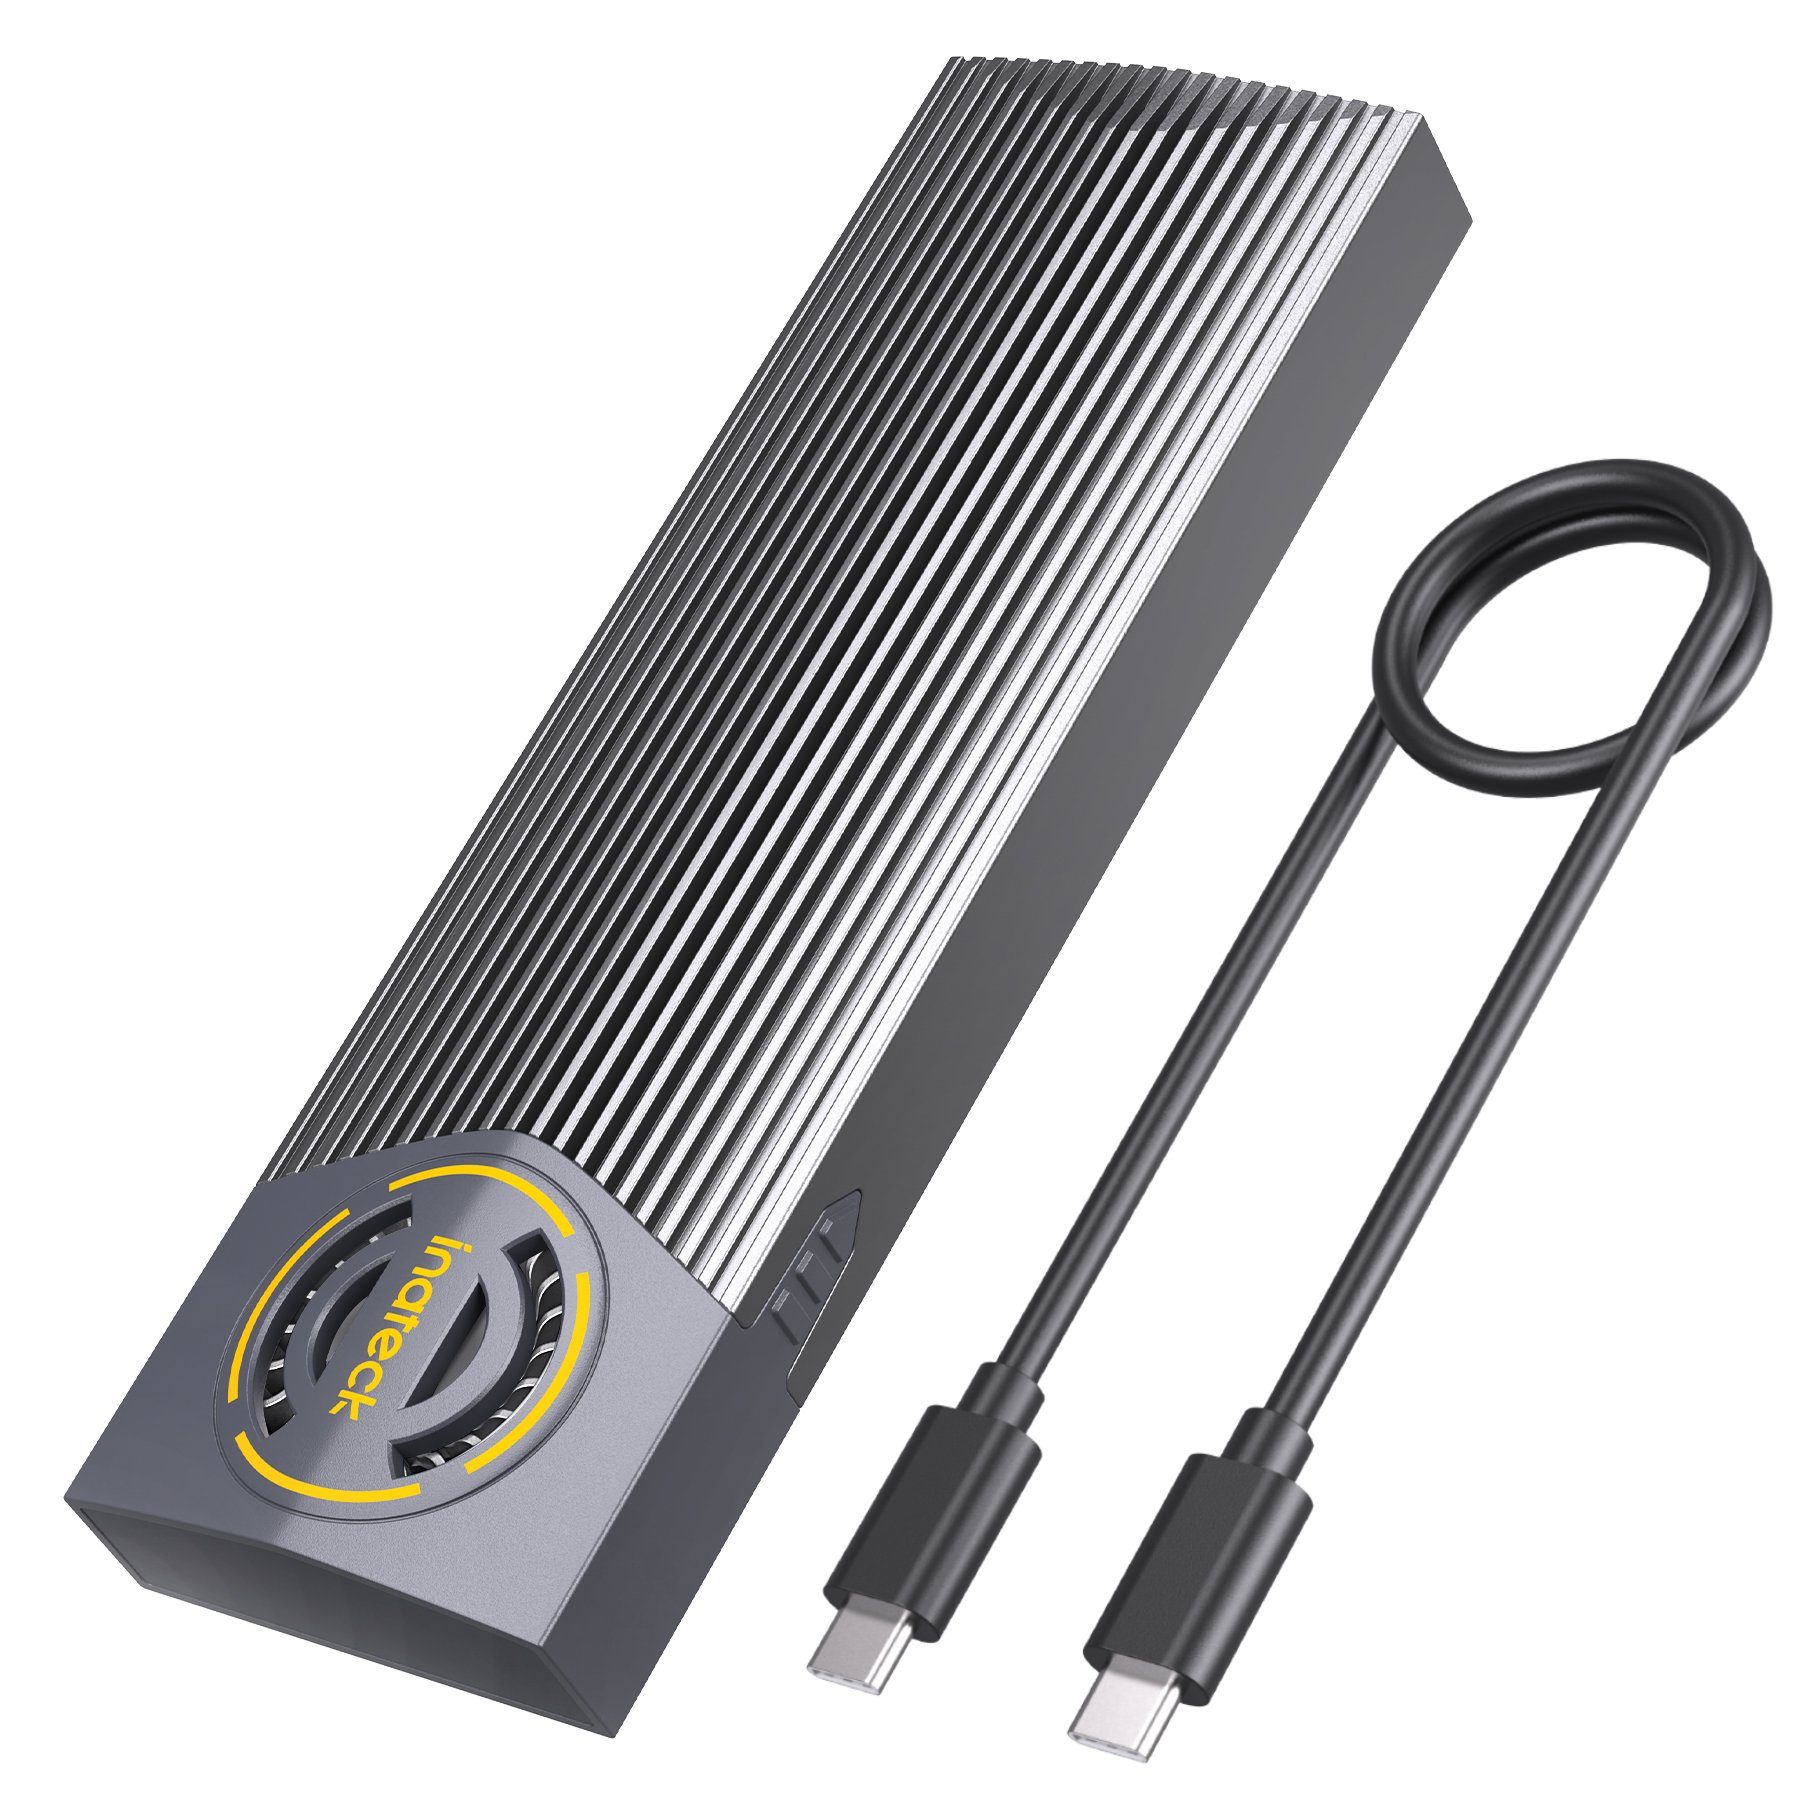 Inateck Festplatten-Gehäuse NVMe Gehäuse, USB 3.2 Gen 2 M.2 SSD Adapter